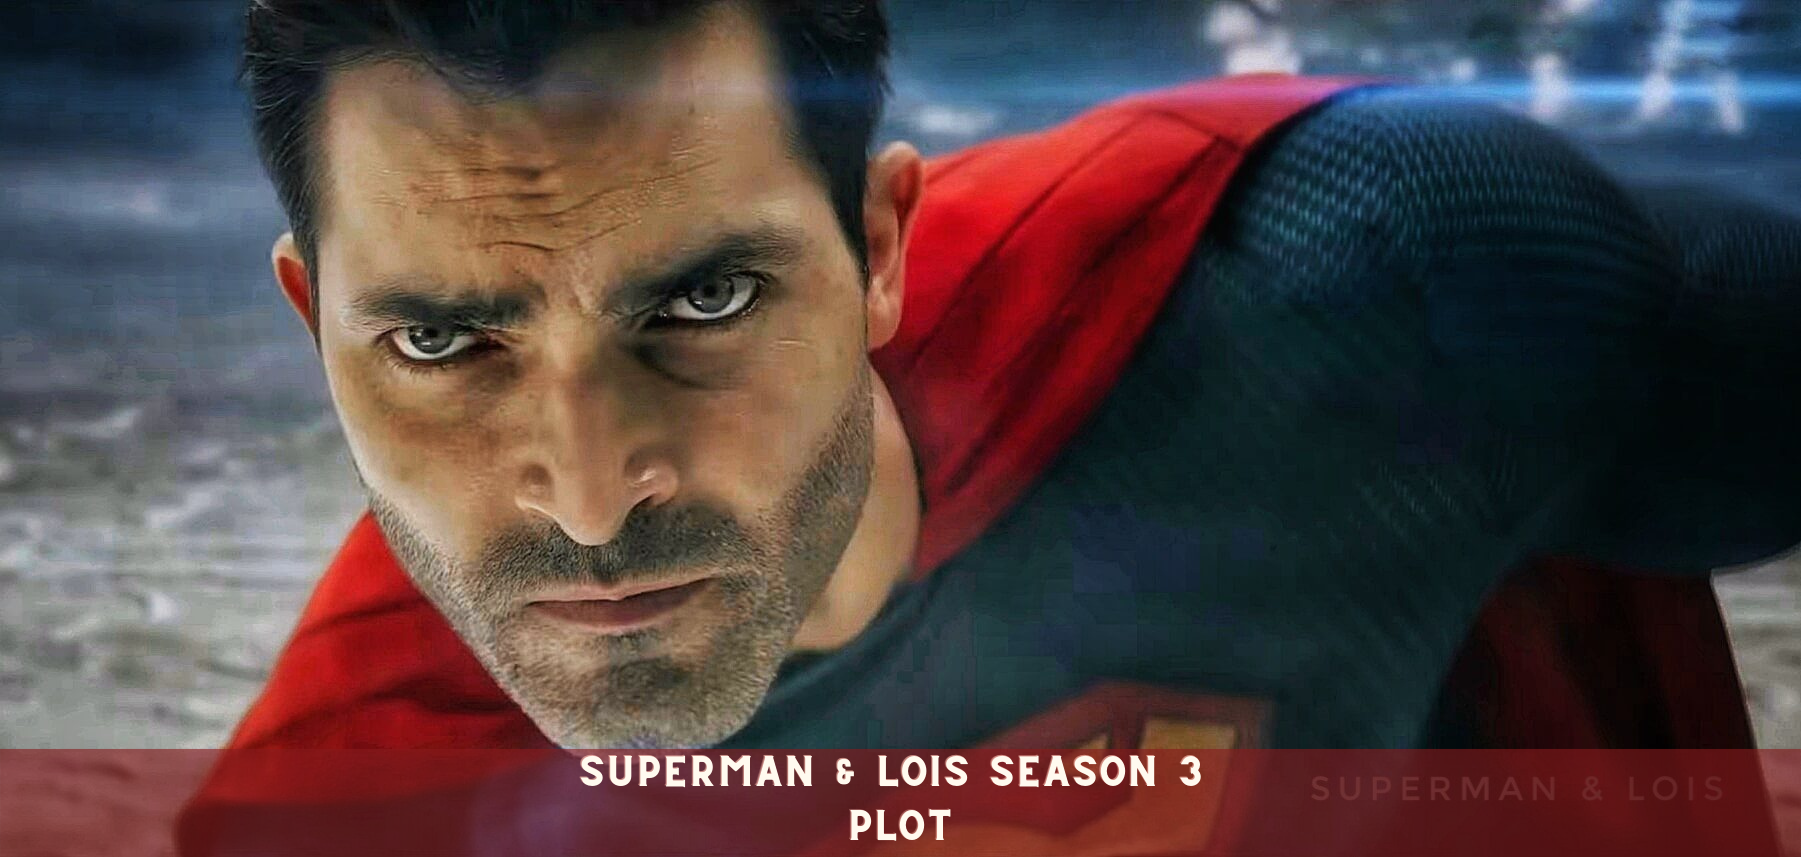 Superman & Lois Season 3 Plot